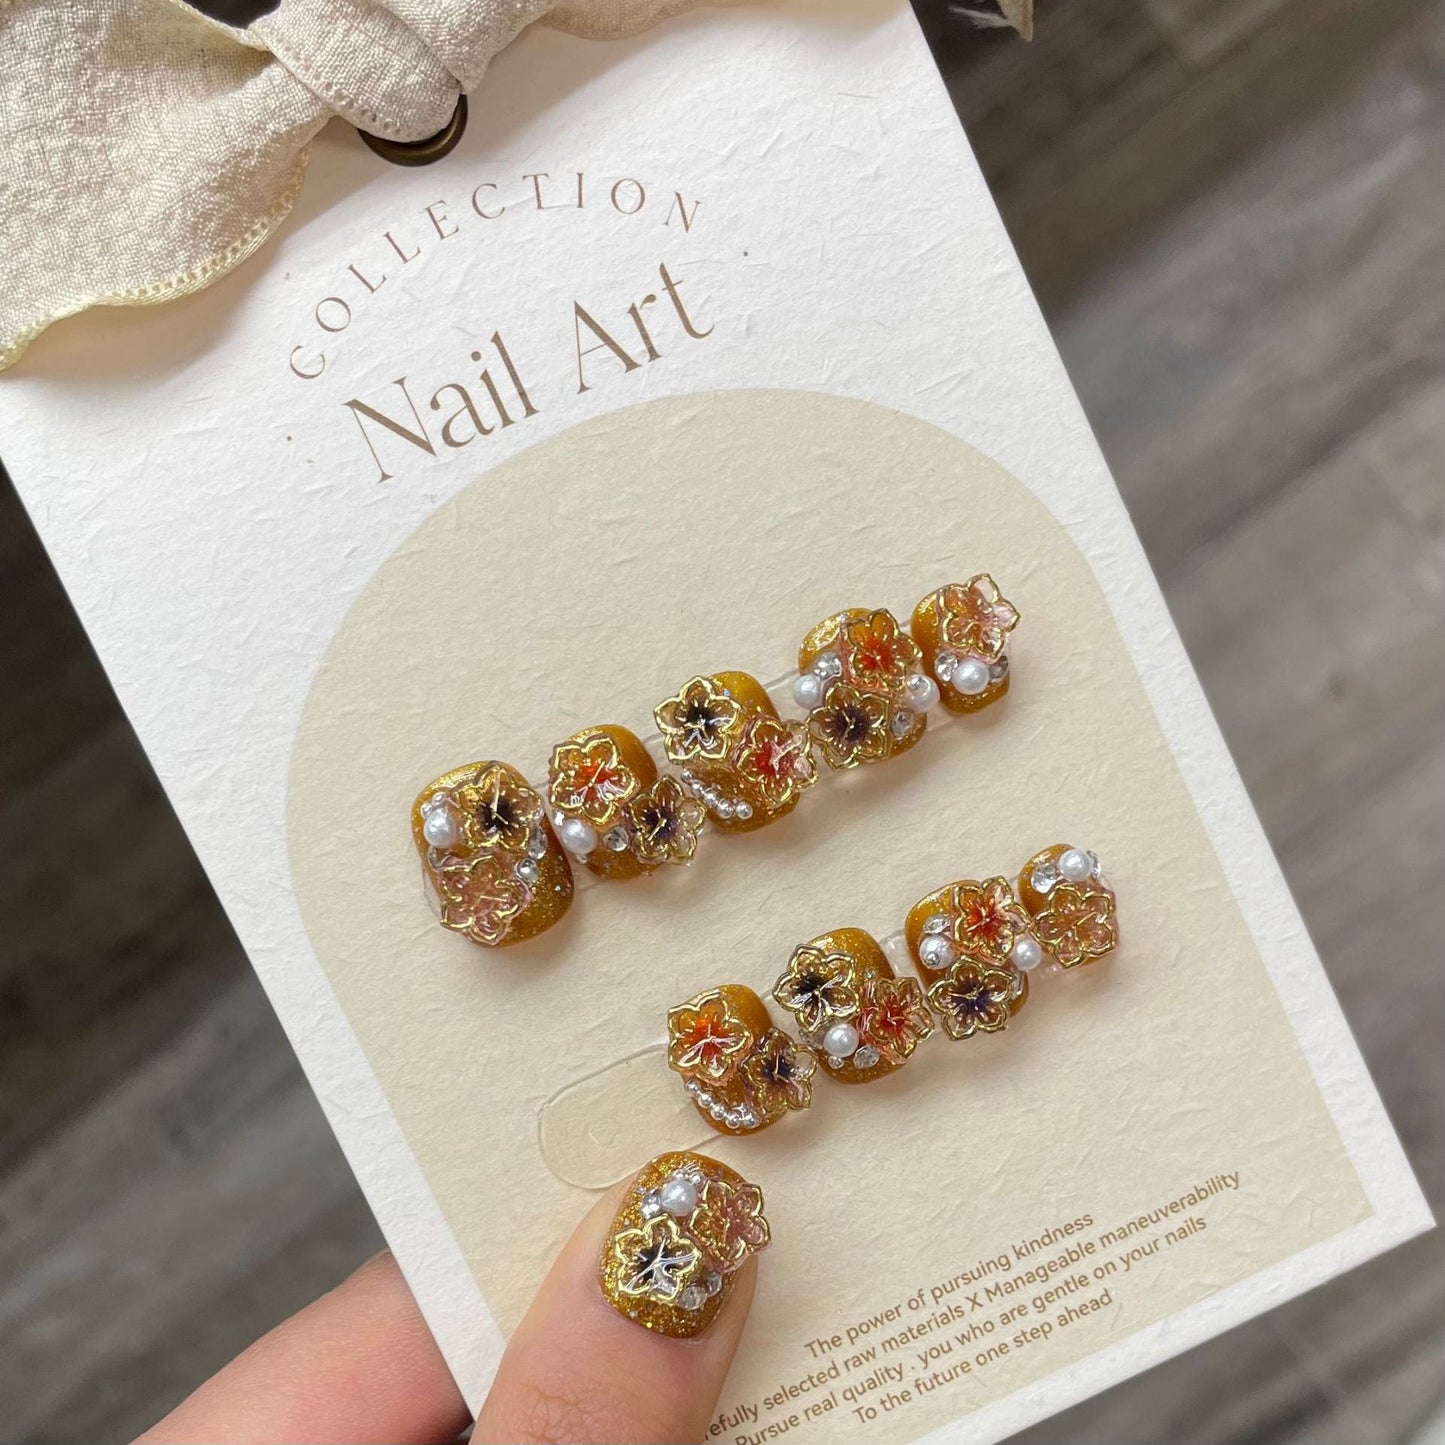 821 Golden Flower style press on nails 100% handmade false nails golden